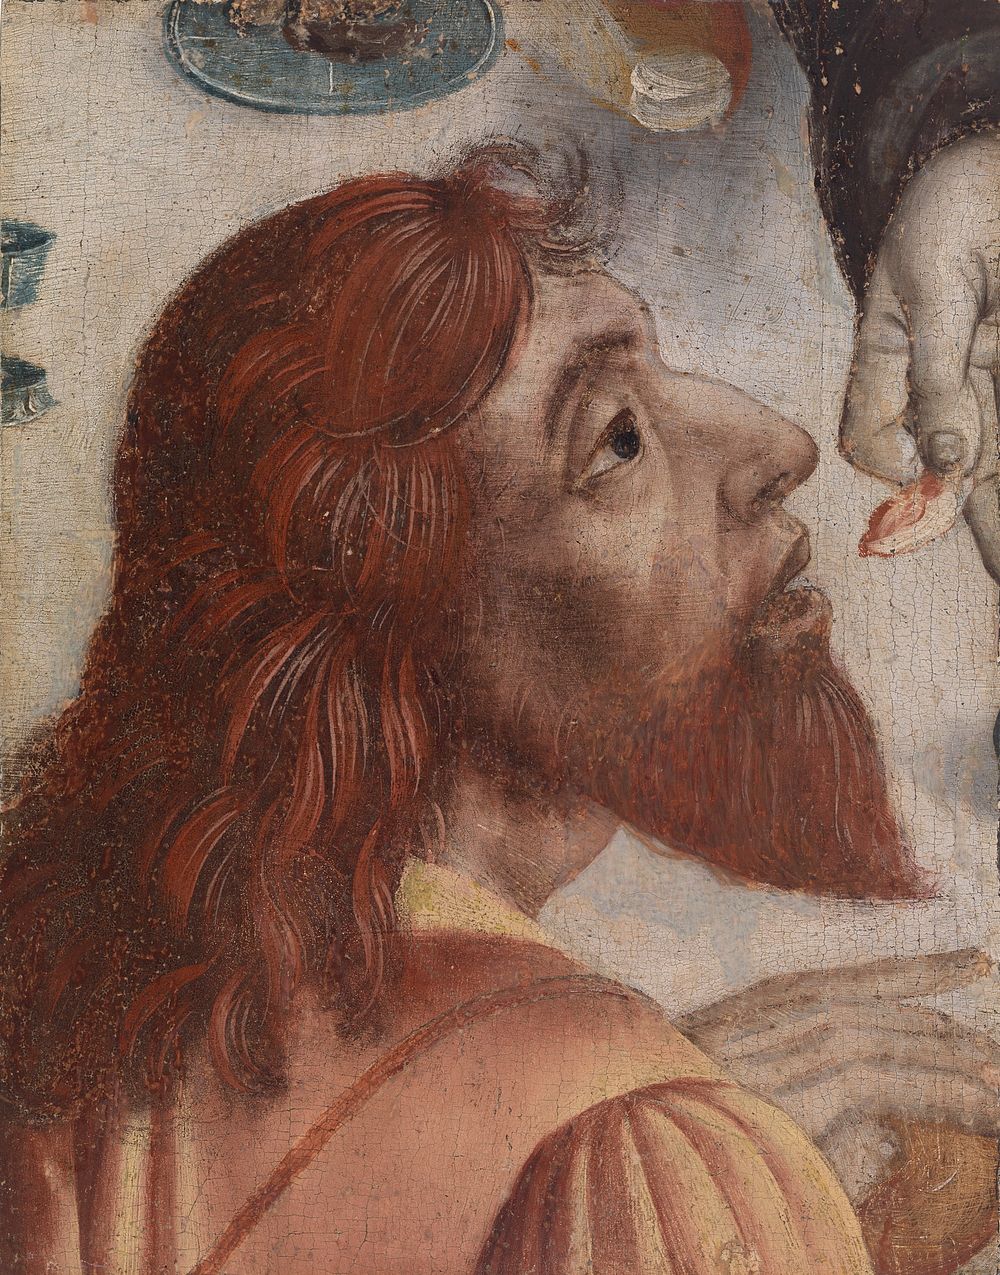 Apostle's Head by Unidentified artist